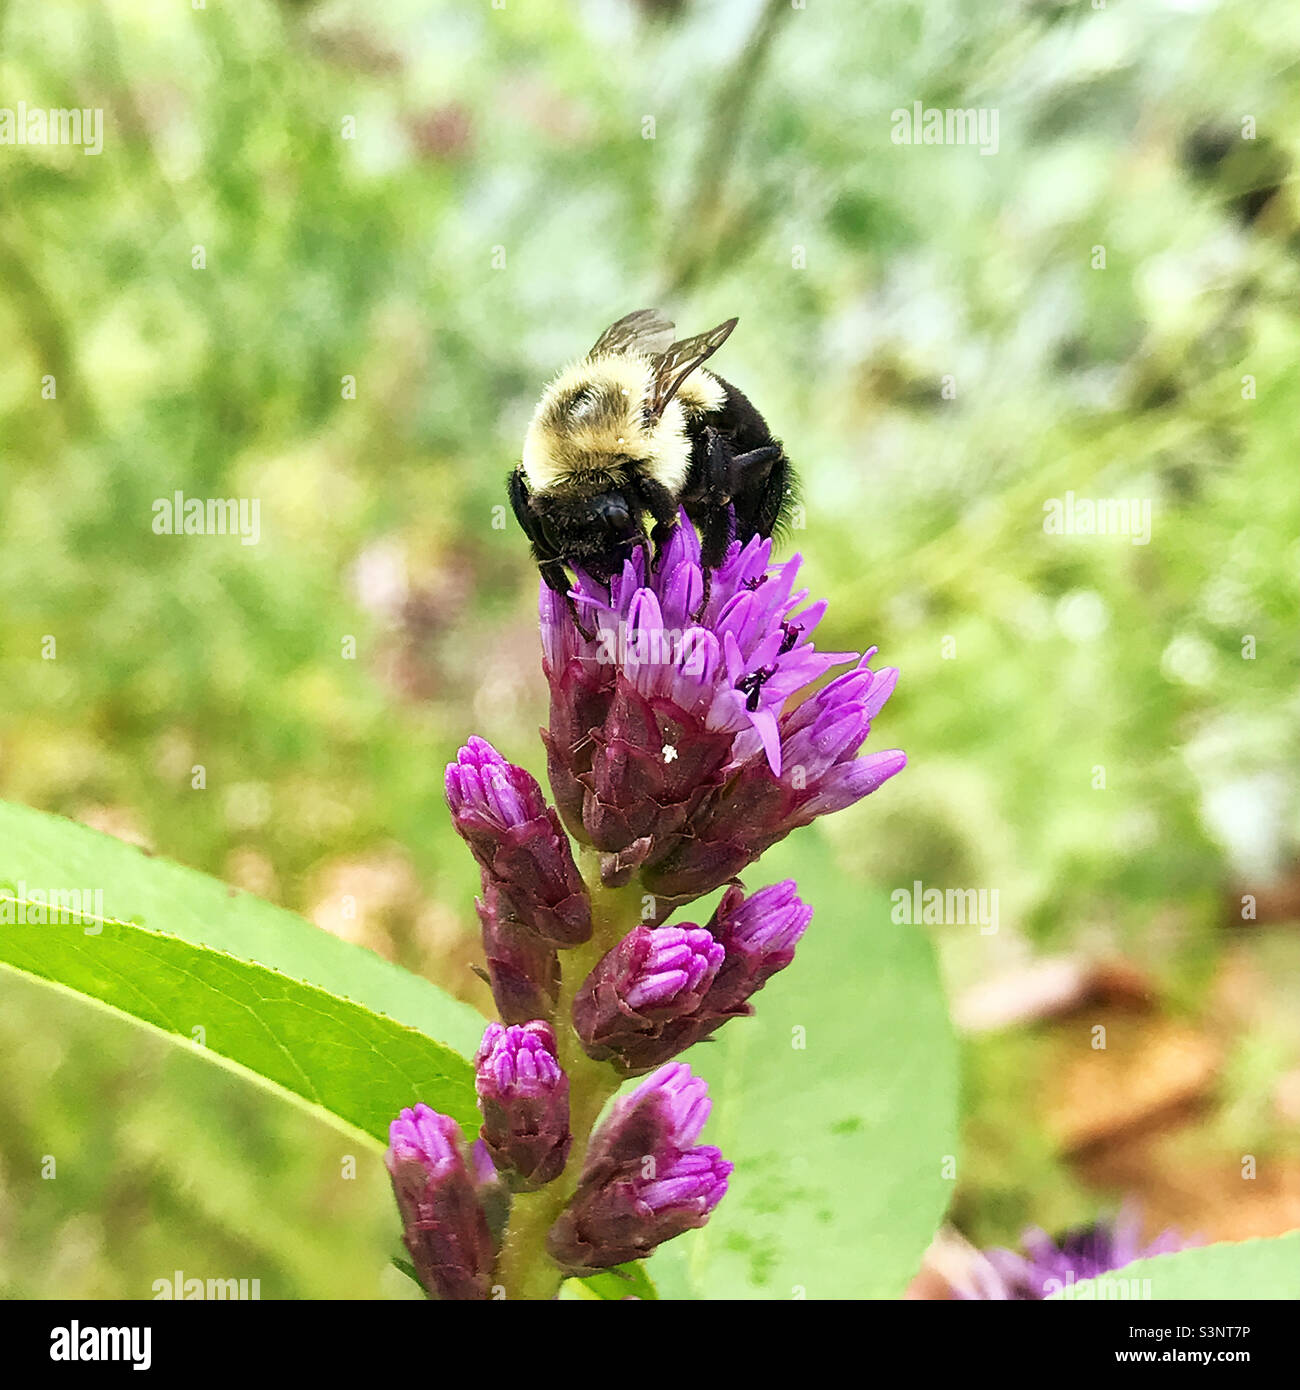 Bee pollinating a purple Liatris flower blossom. Stock Photo